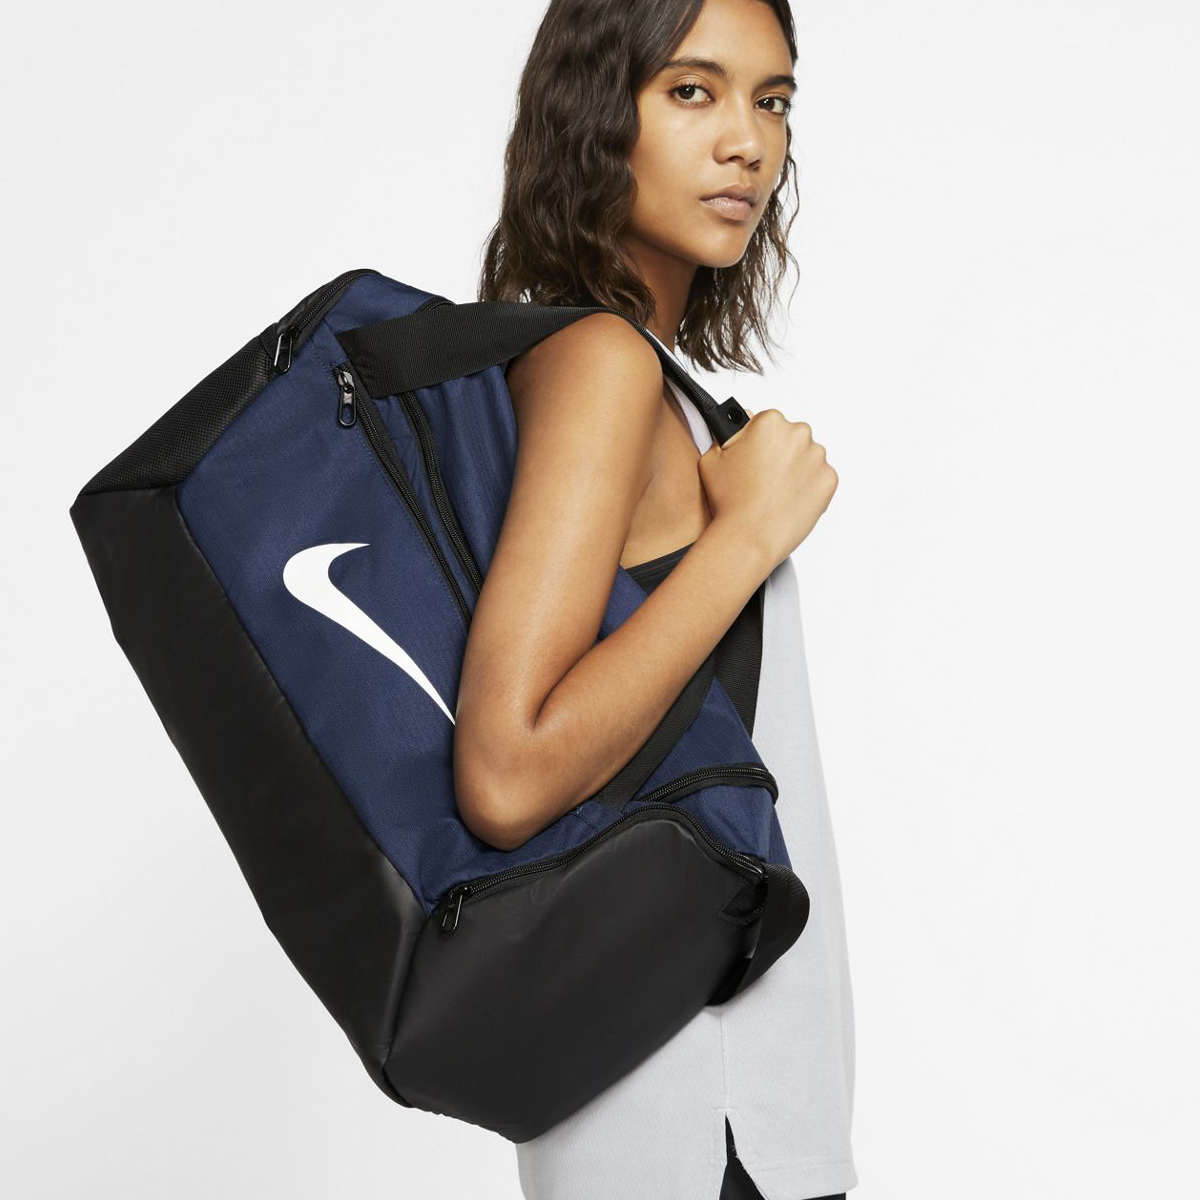 Nike Brasilia Duffle Bags, , large image number null